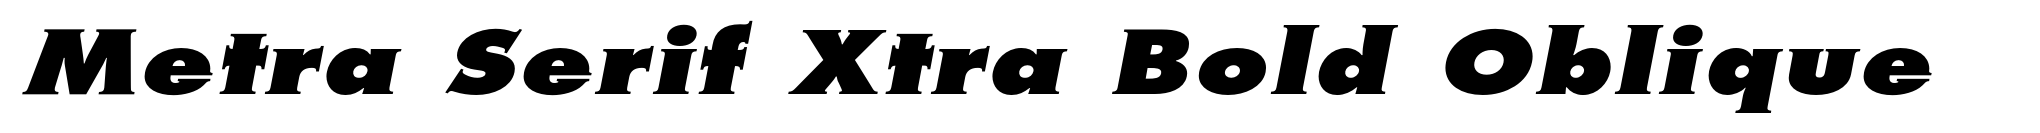 Metra Serif Xtra Bold Oblique image